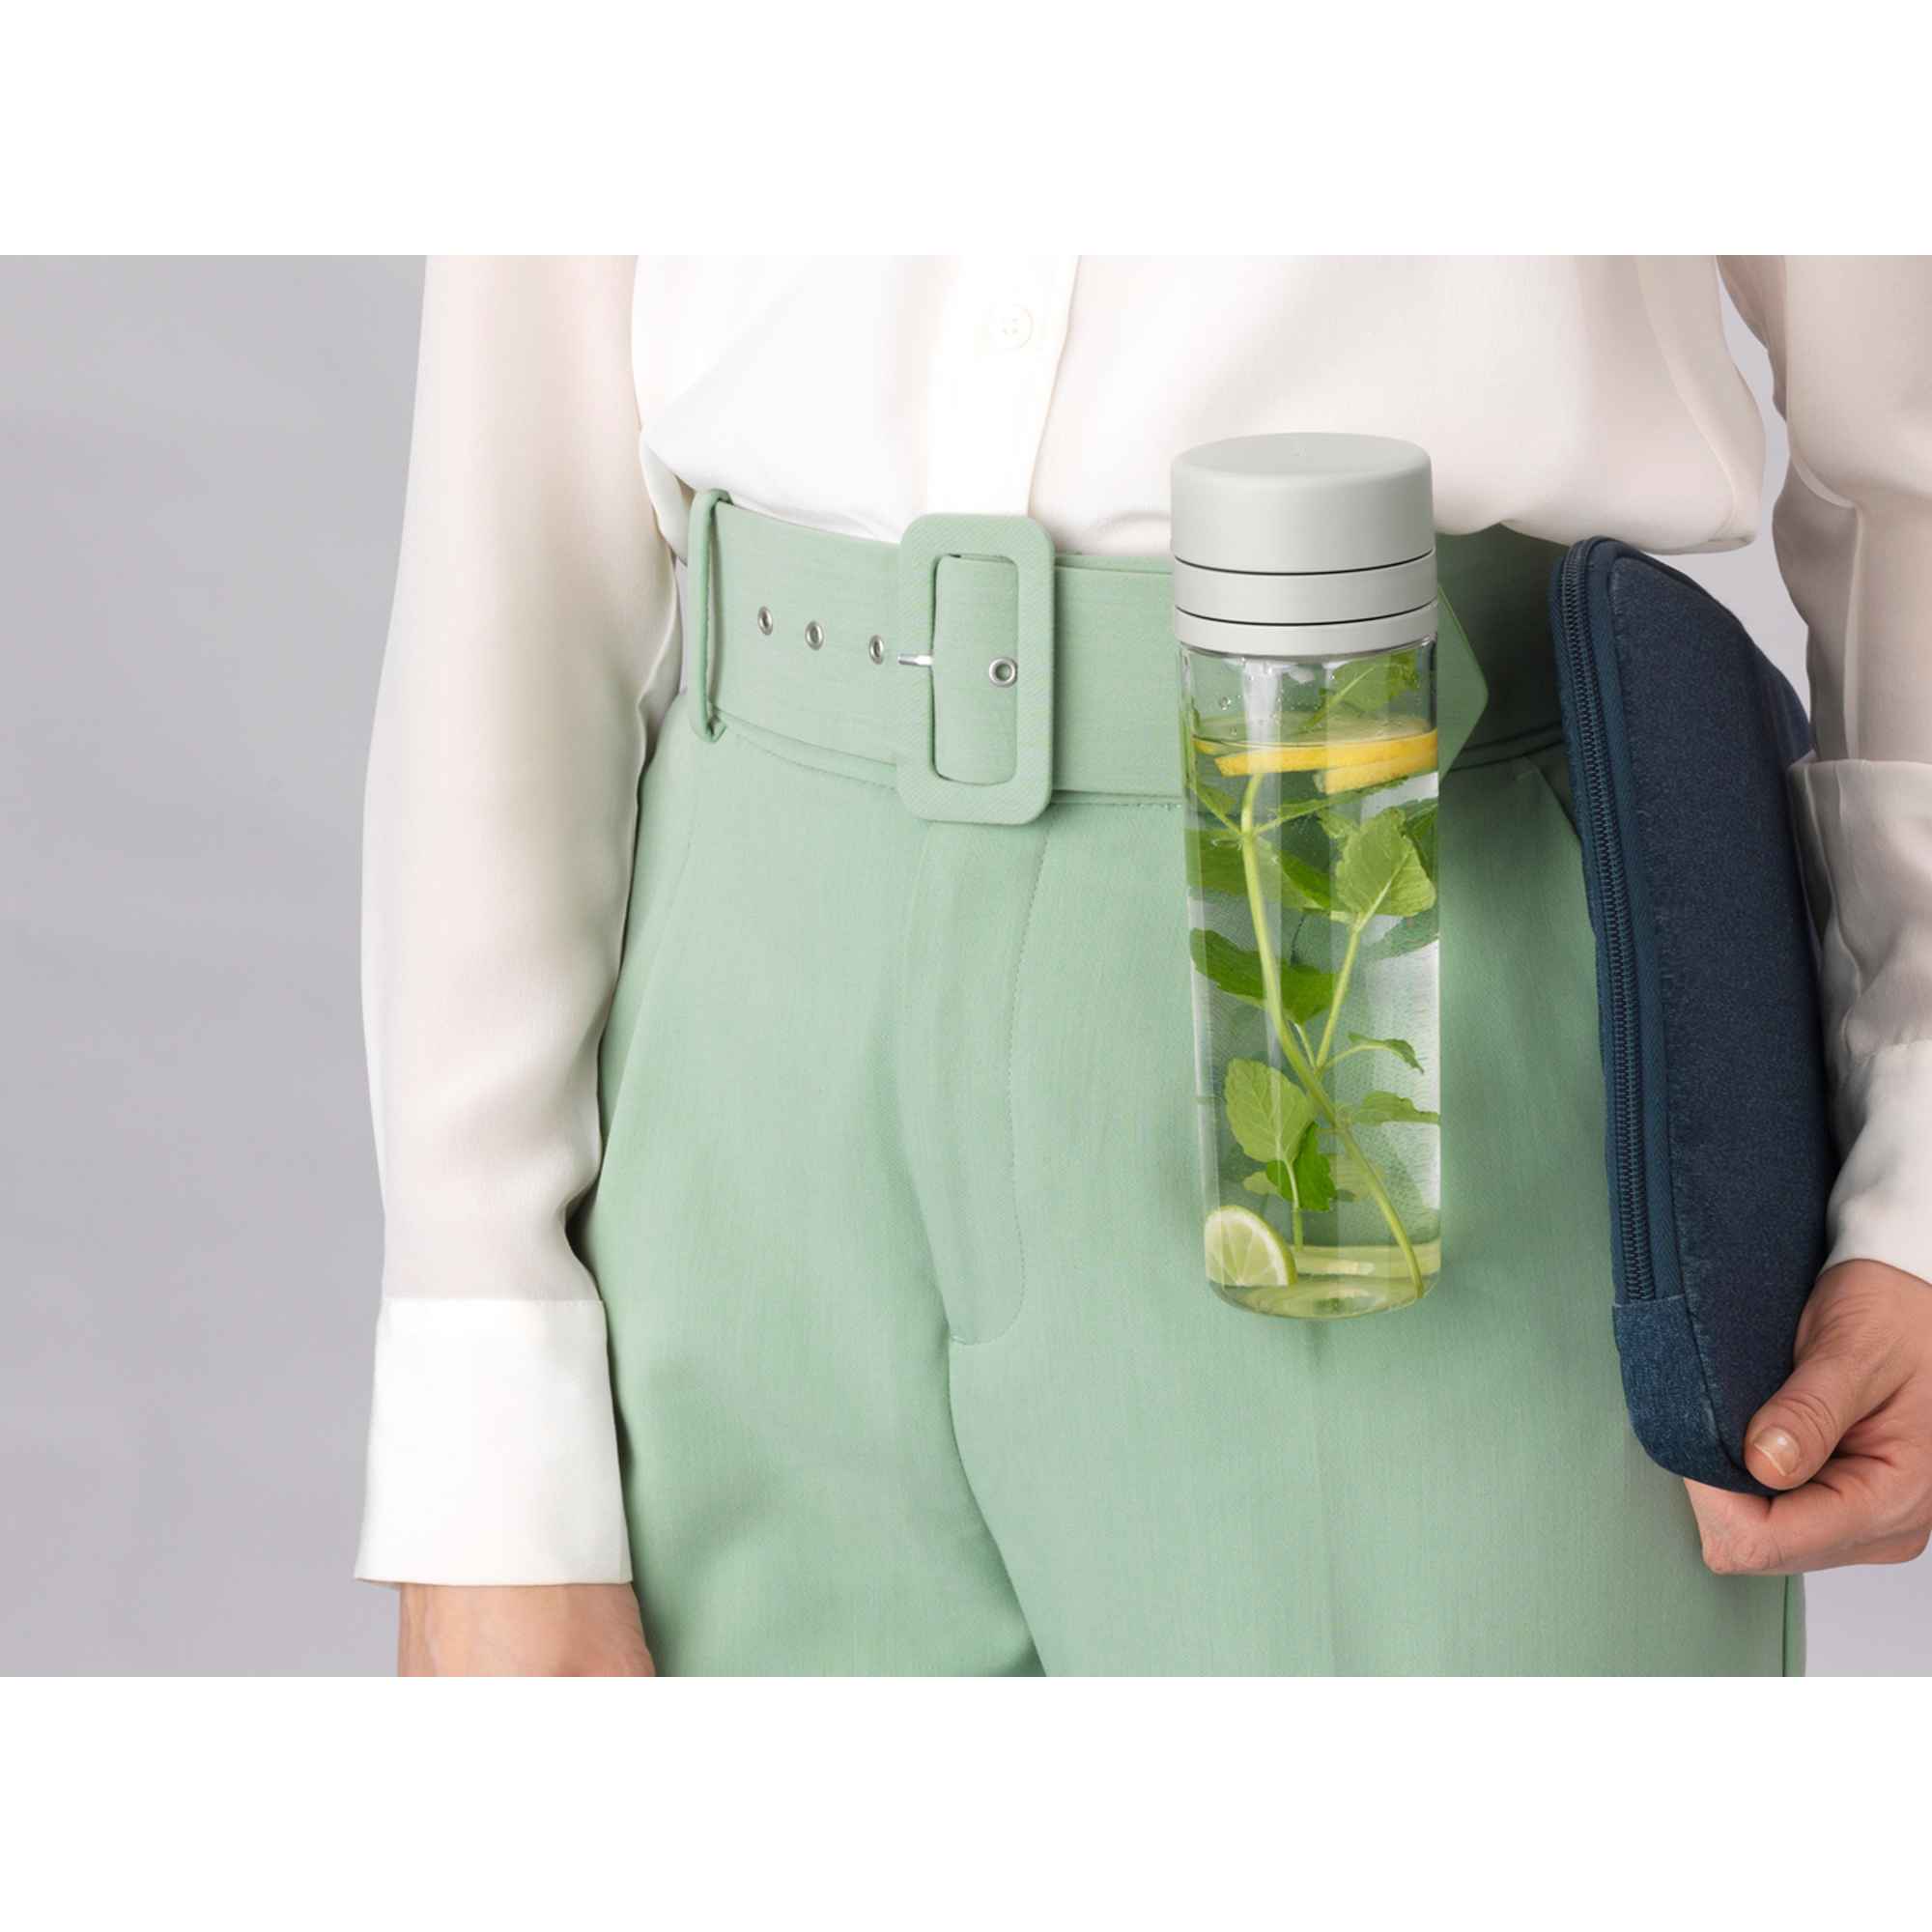 Trinkflasche 'Make & Take' mit Sieb hellgrau 0,5 l + product picture